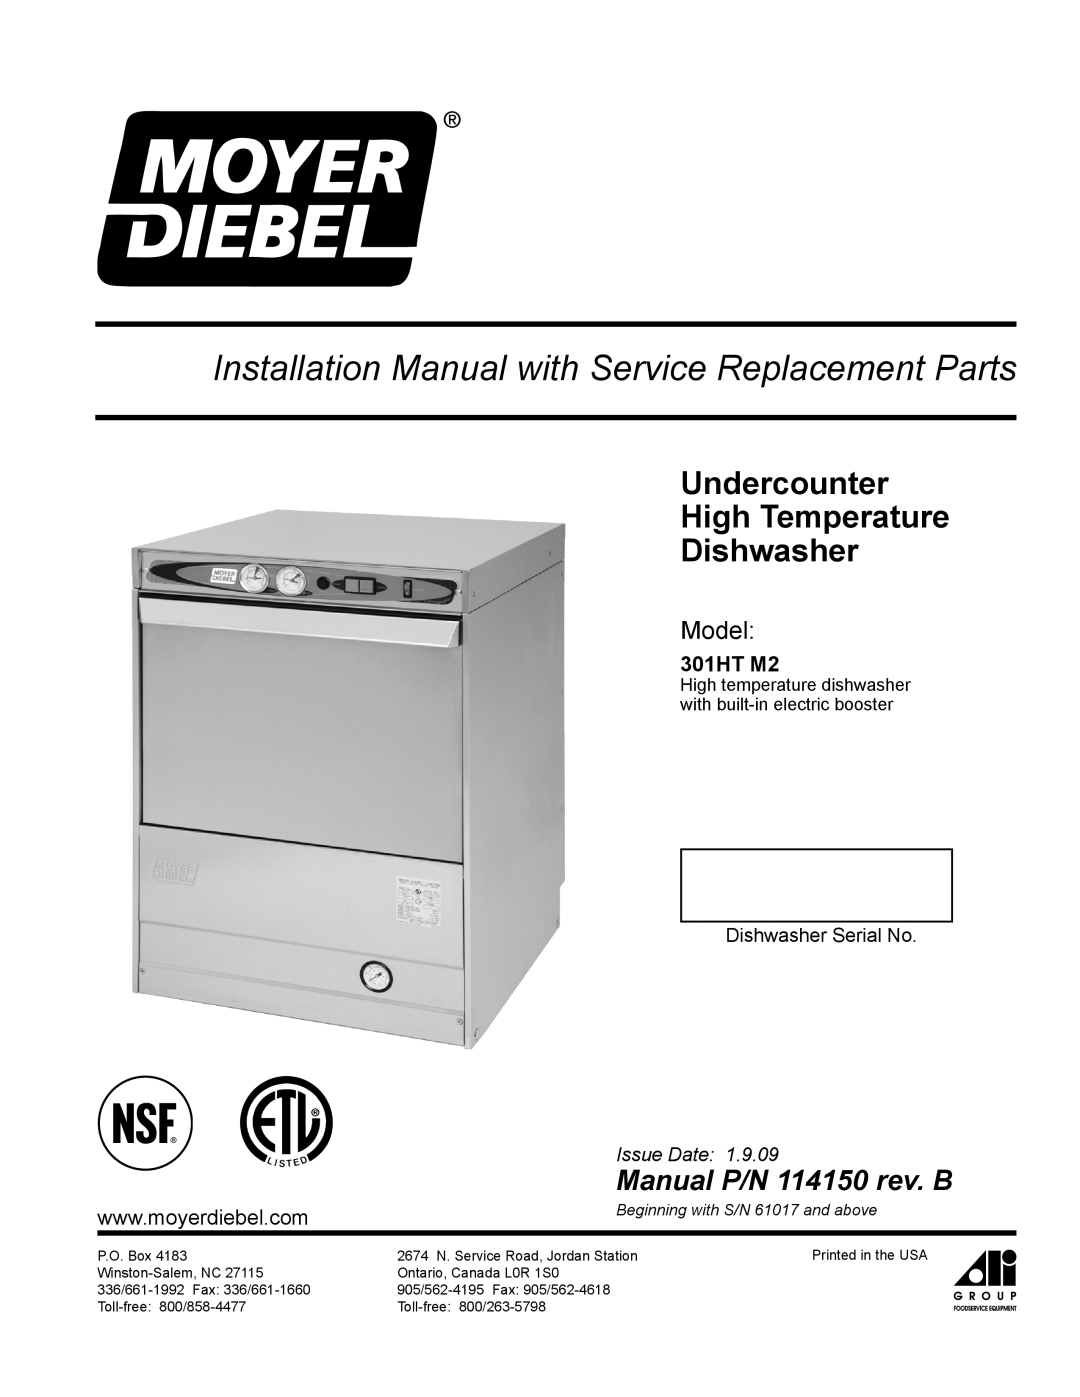 Moyer Diebel 301HT M2 installation manual Undercounter High Temperature Dishwasher, Manual P/N 114150 rev. B 